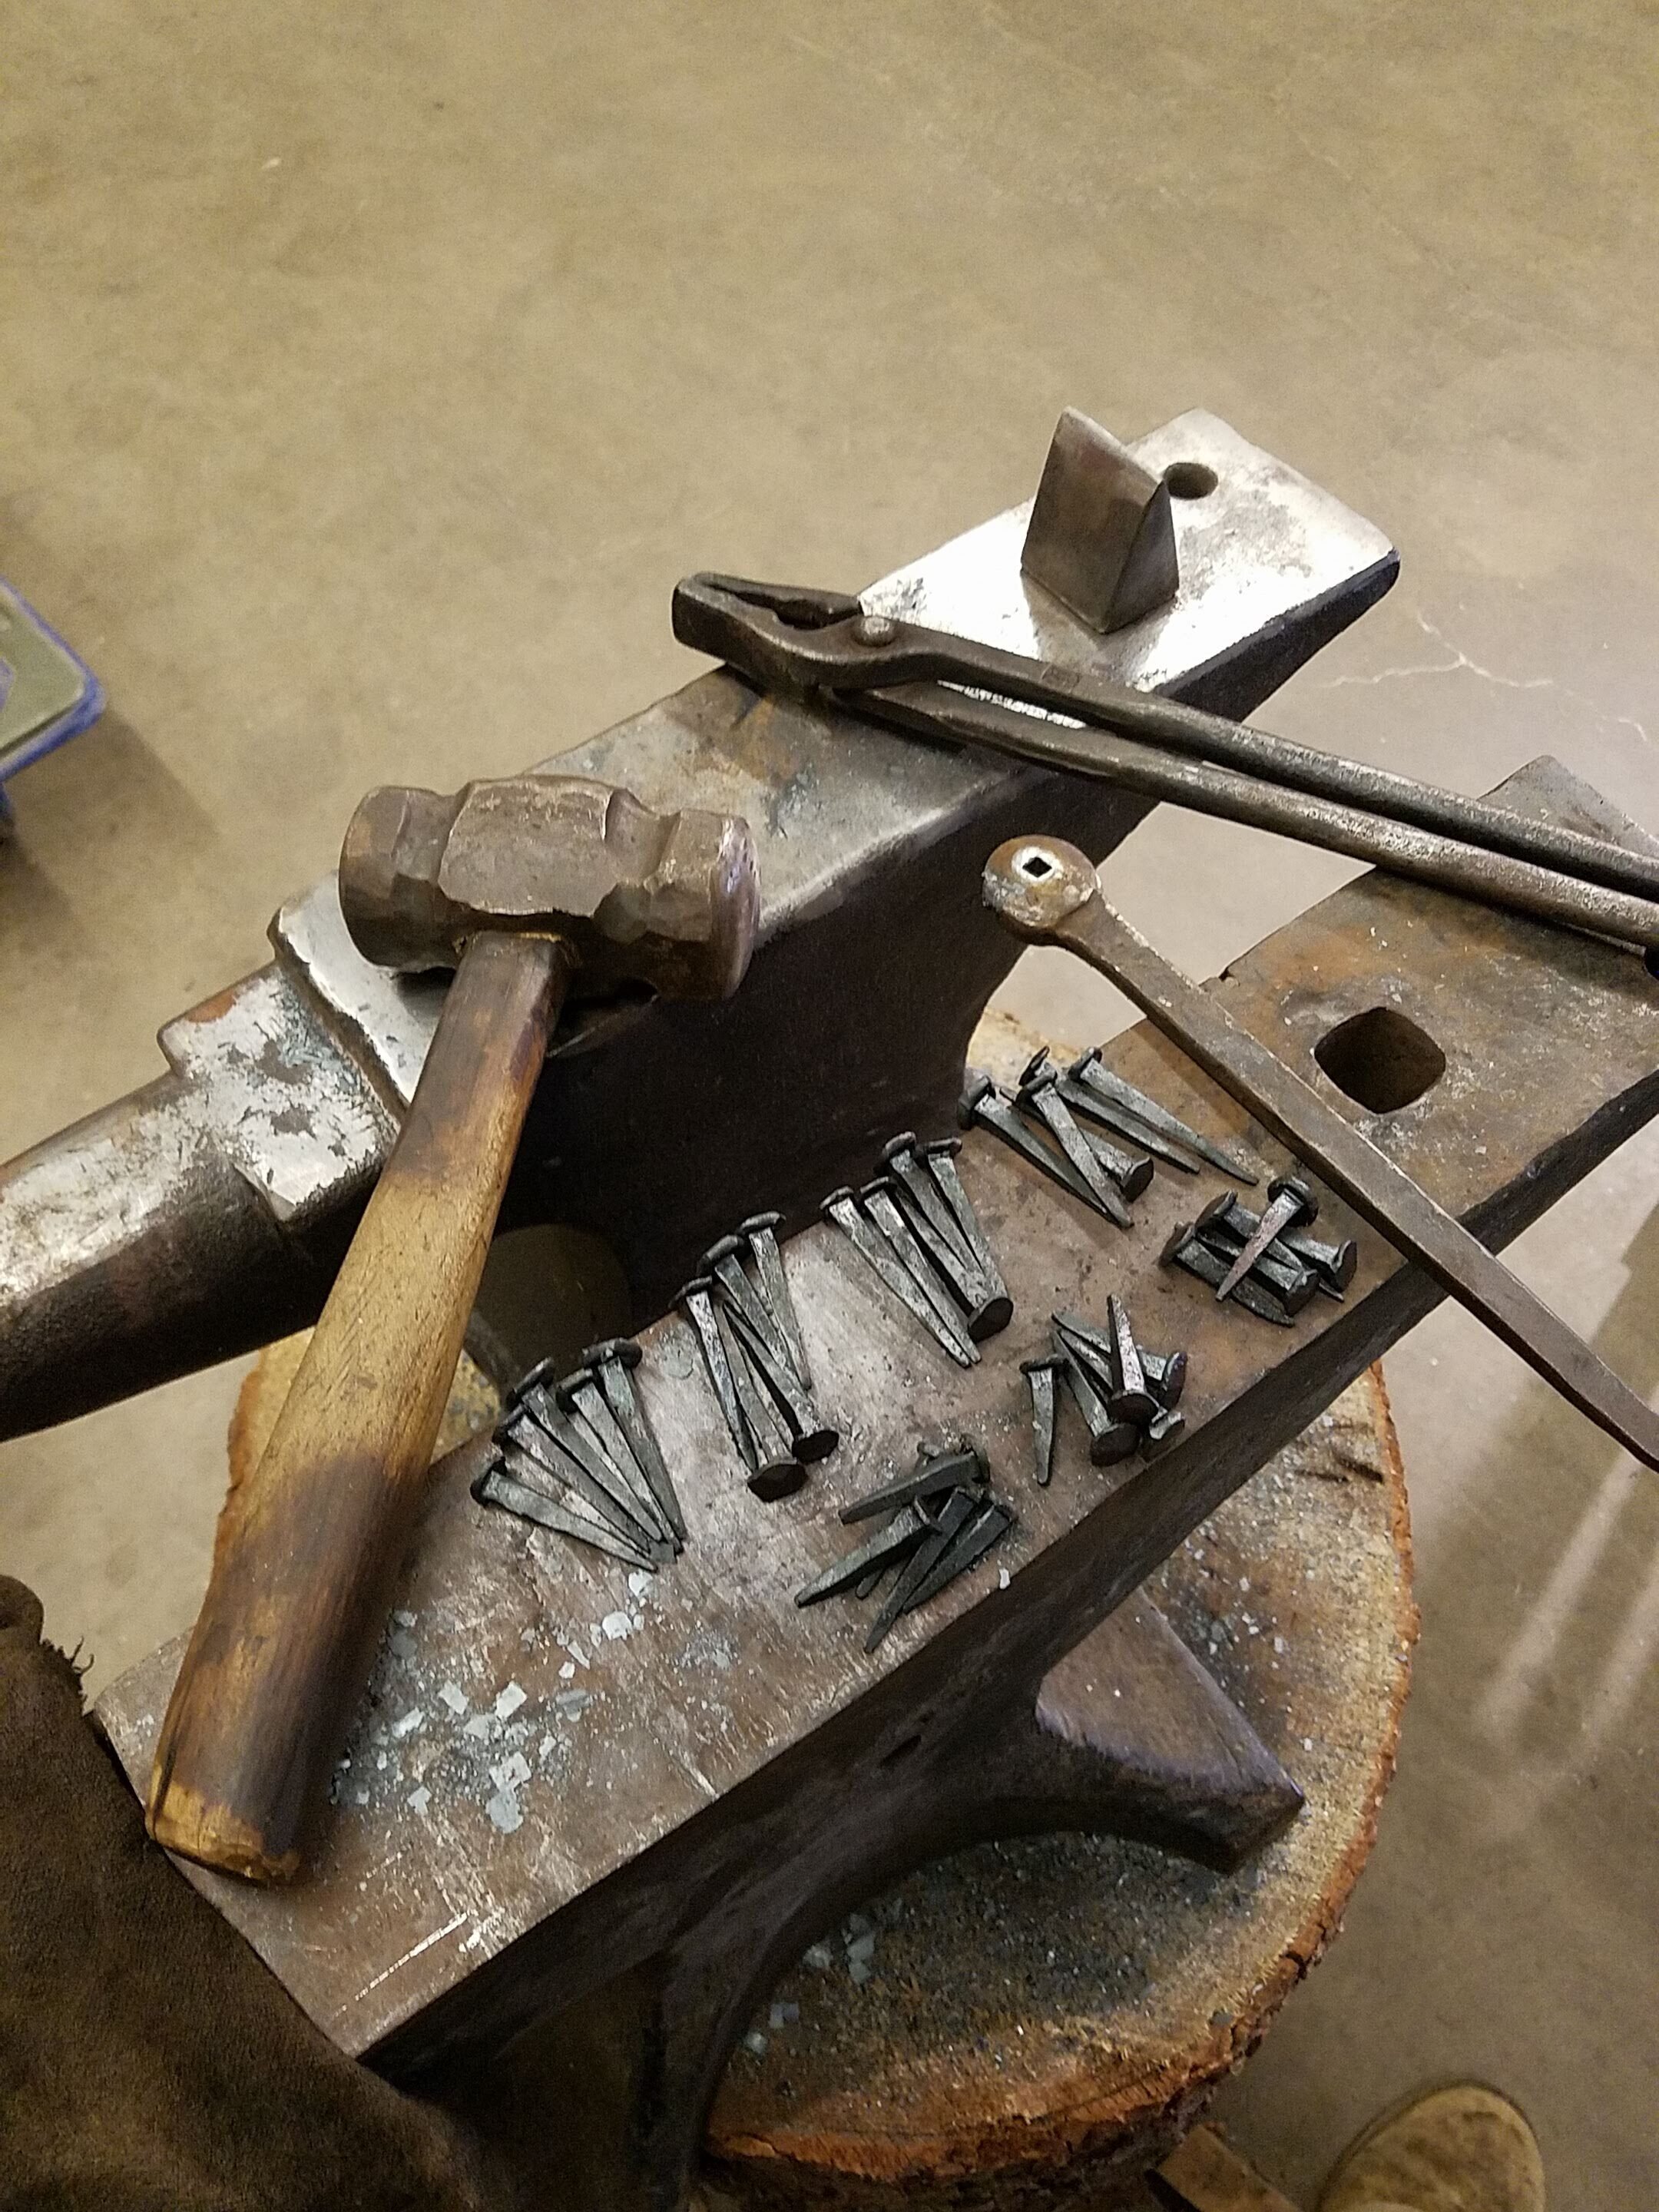 A collection of Blacksmithing Tools, including a hammer, tongs, nail header and freshly made nails